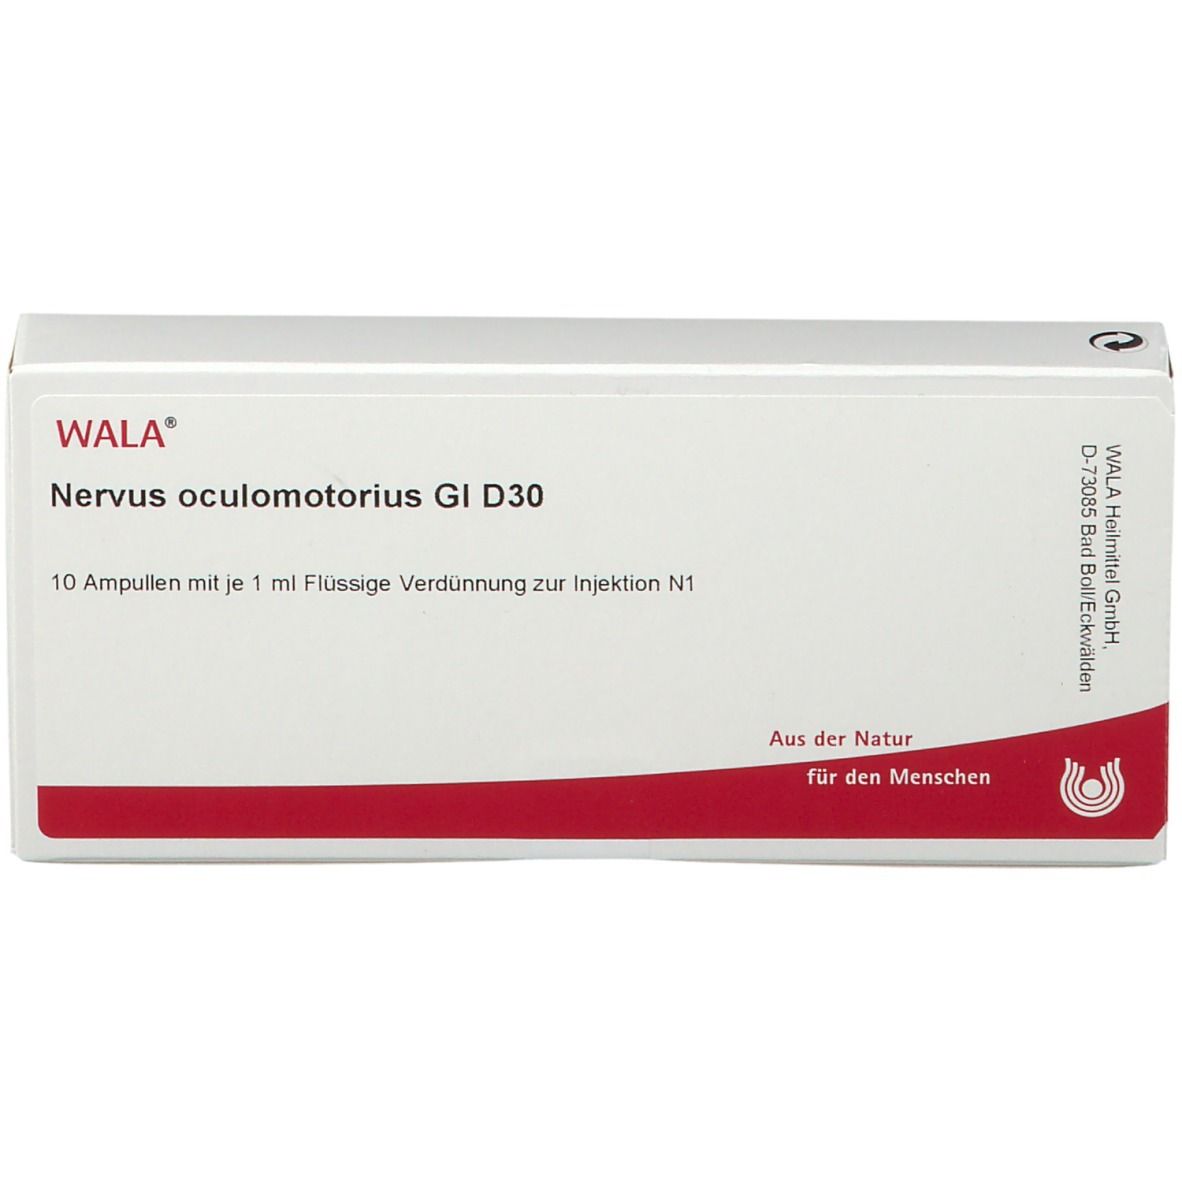 WALA® Nervus oculomotorius Gl D 30